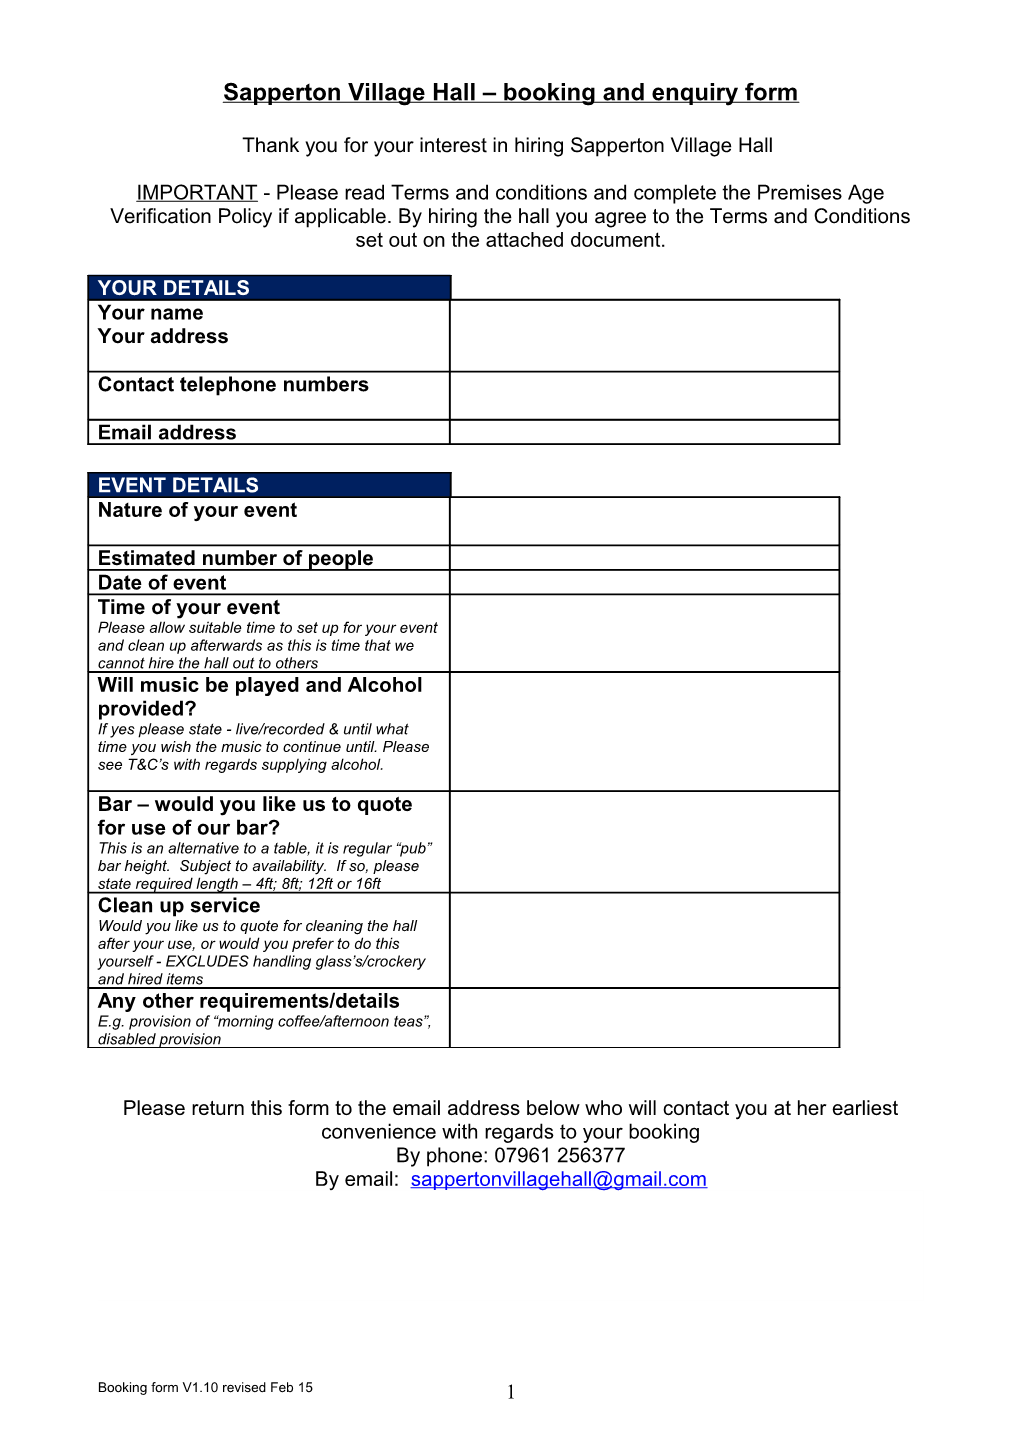 Sapperton Village Hall Booking Form & T&Cs